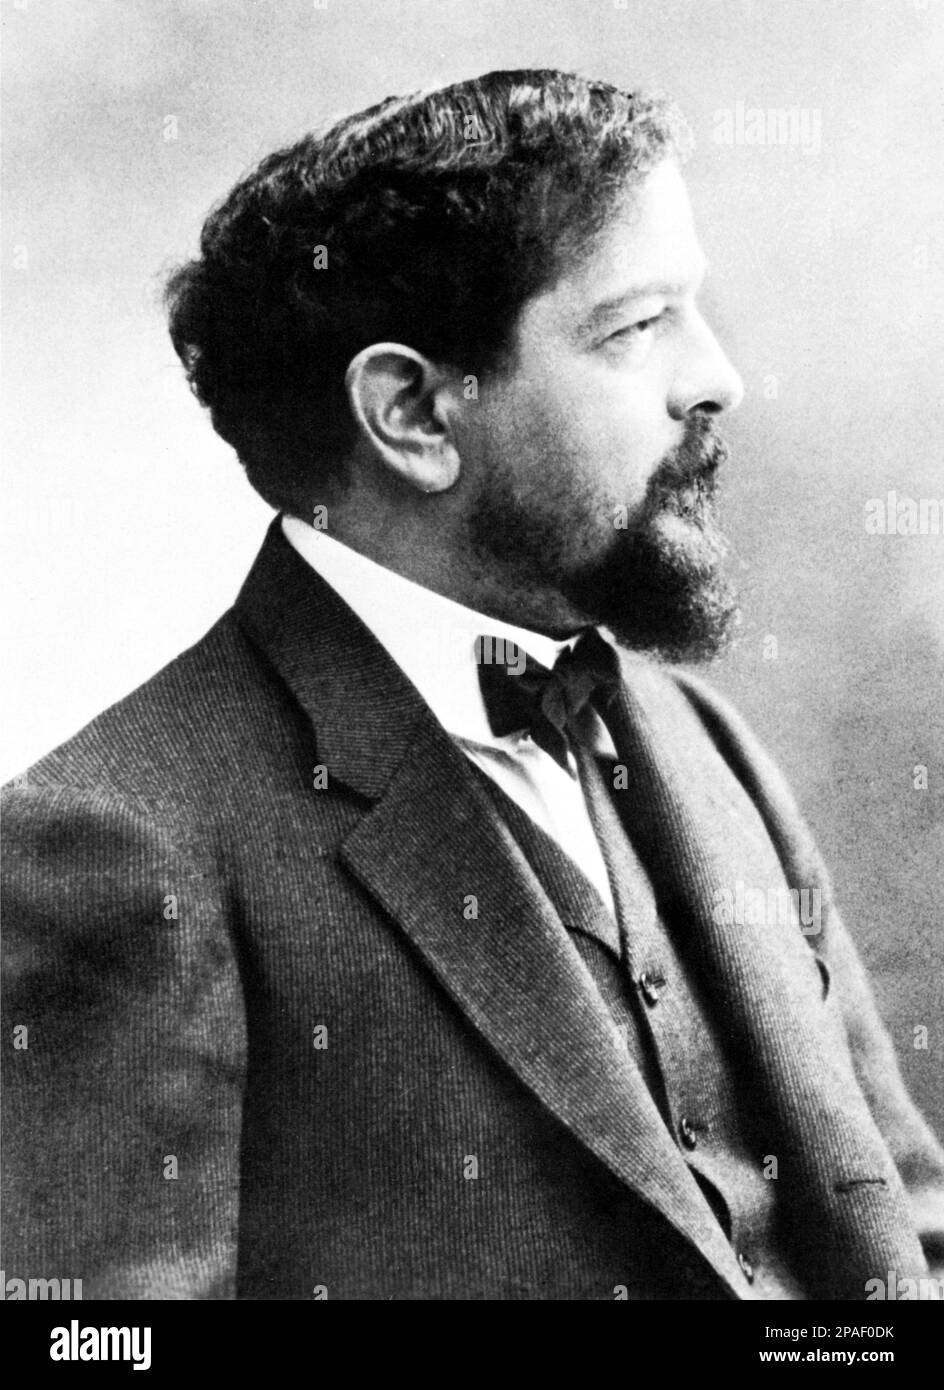 The celebrated french music composer and pianist Claude DEBUSSY ( Saint-Germain-en-Laye 1862 - Paris 1918 )  - COMPOSITORE - MUSICA CLASSICA - classical - musicista - COMPOSITORE - MUSICISTA - MUSICA CLASSICA  - CLASSICAL - PORTRAIT - RITRATTO- barba - beard - papillon - tie bow - profilo  ----       ARCHIVIO GBB Stock Photo